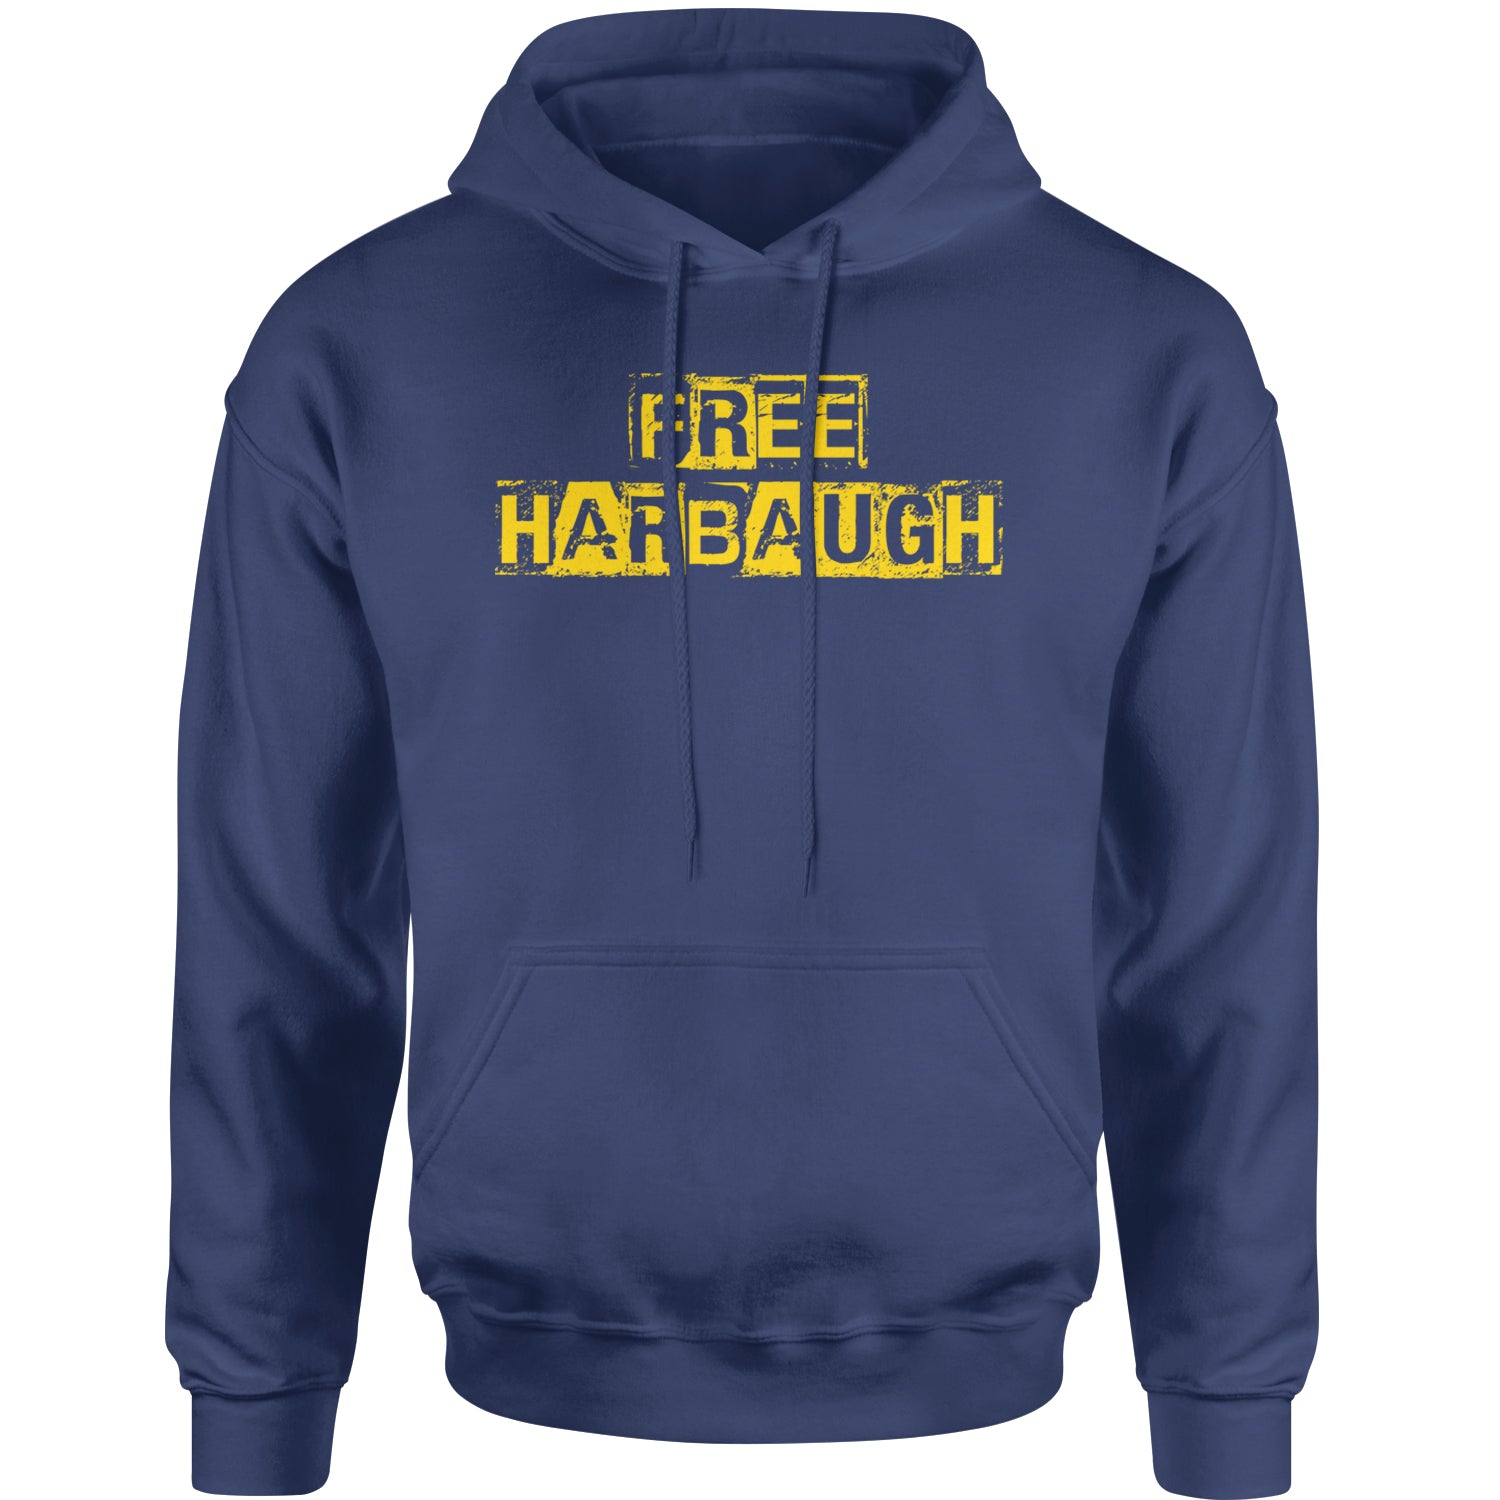 Free Harbaugh Release Our Coach Adult Hoodie Sweatshirt